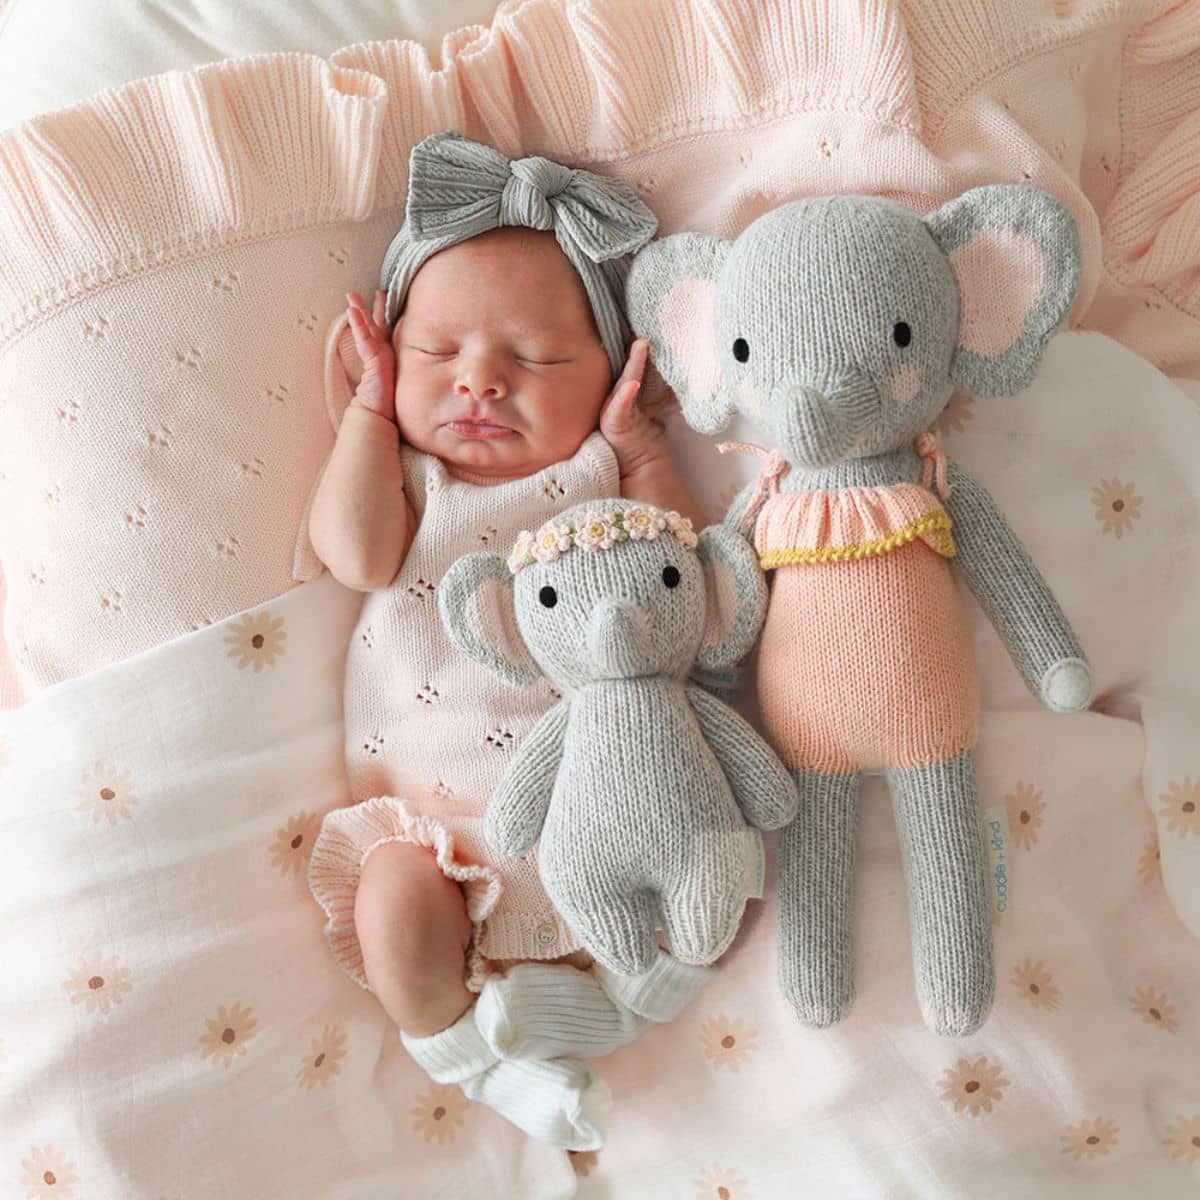 Cuddle + Kind Hand-Knit Doll - Baby Elephant (blush floral)